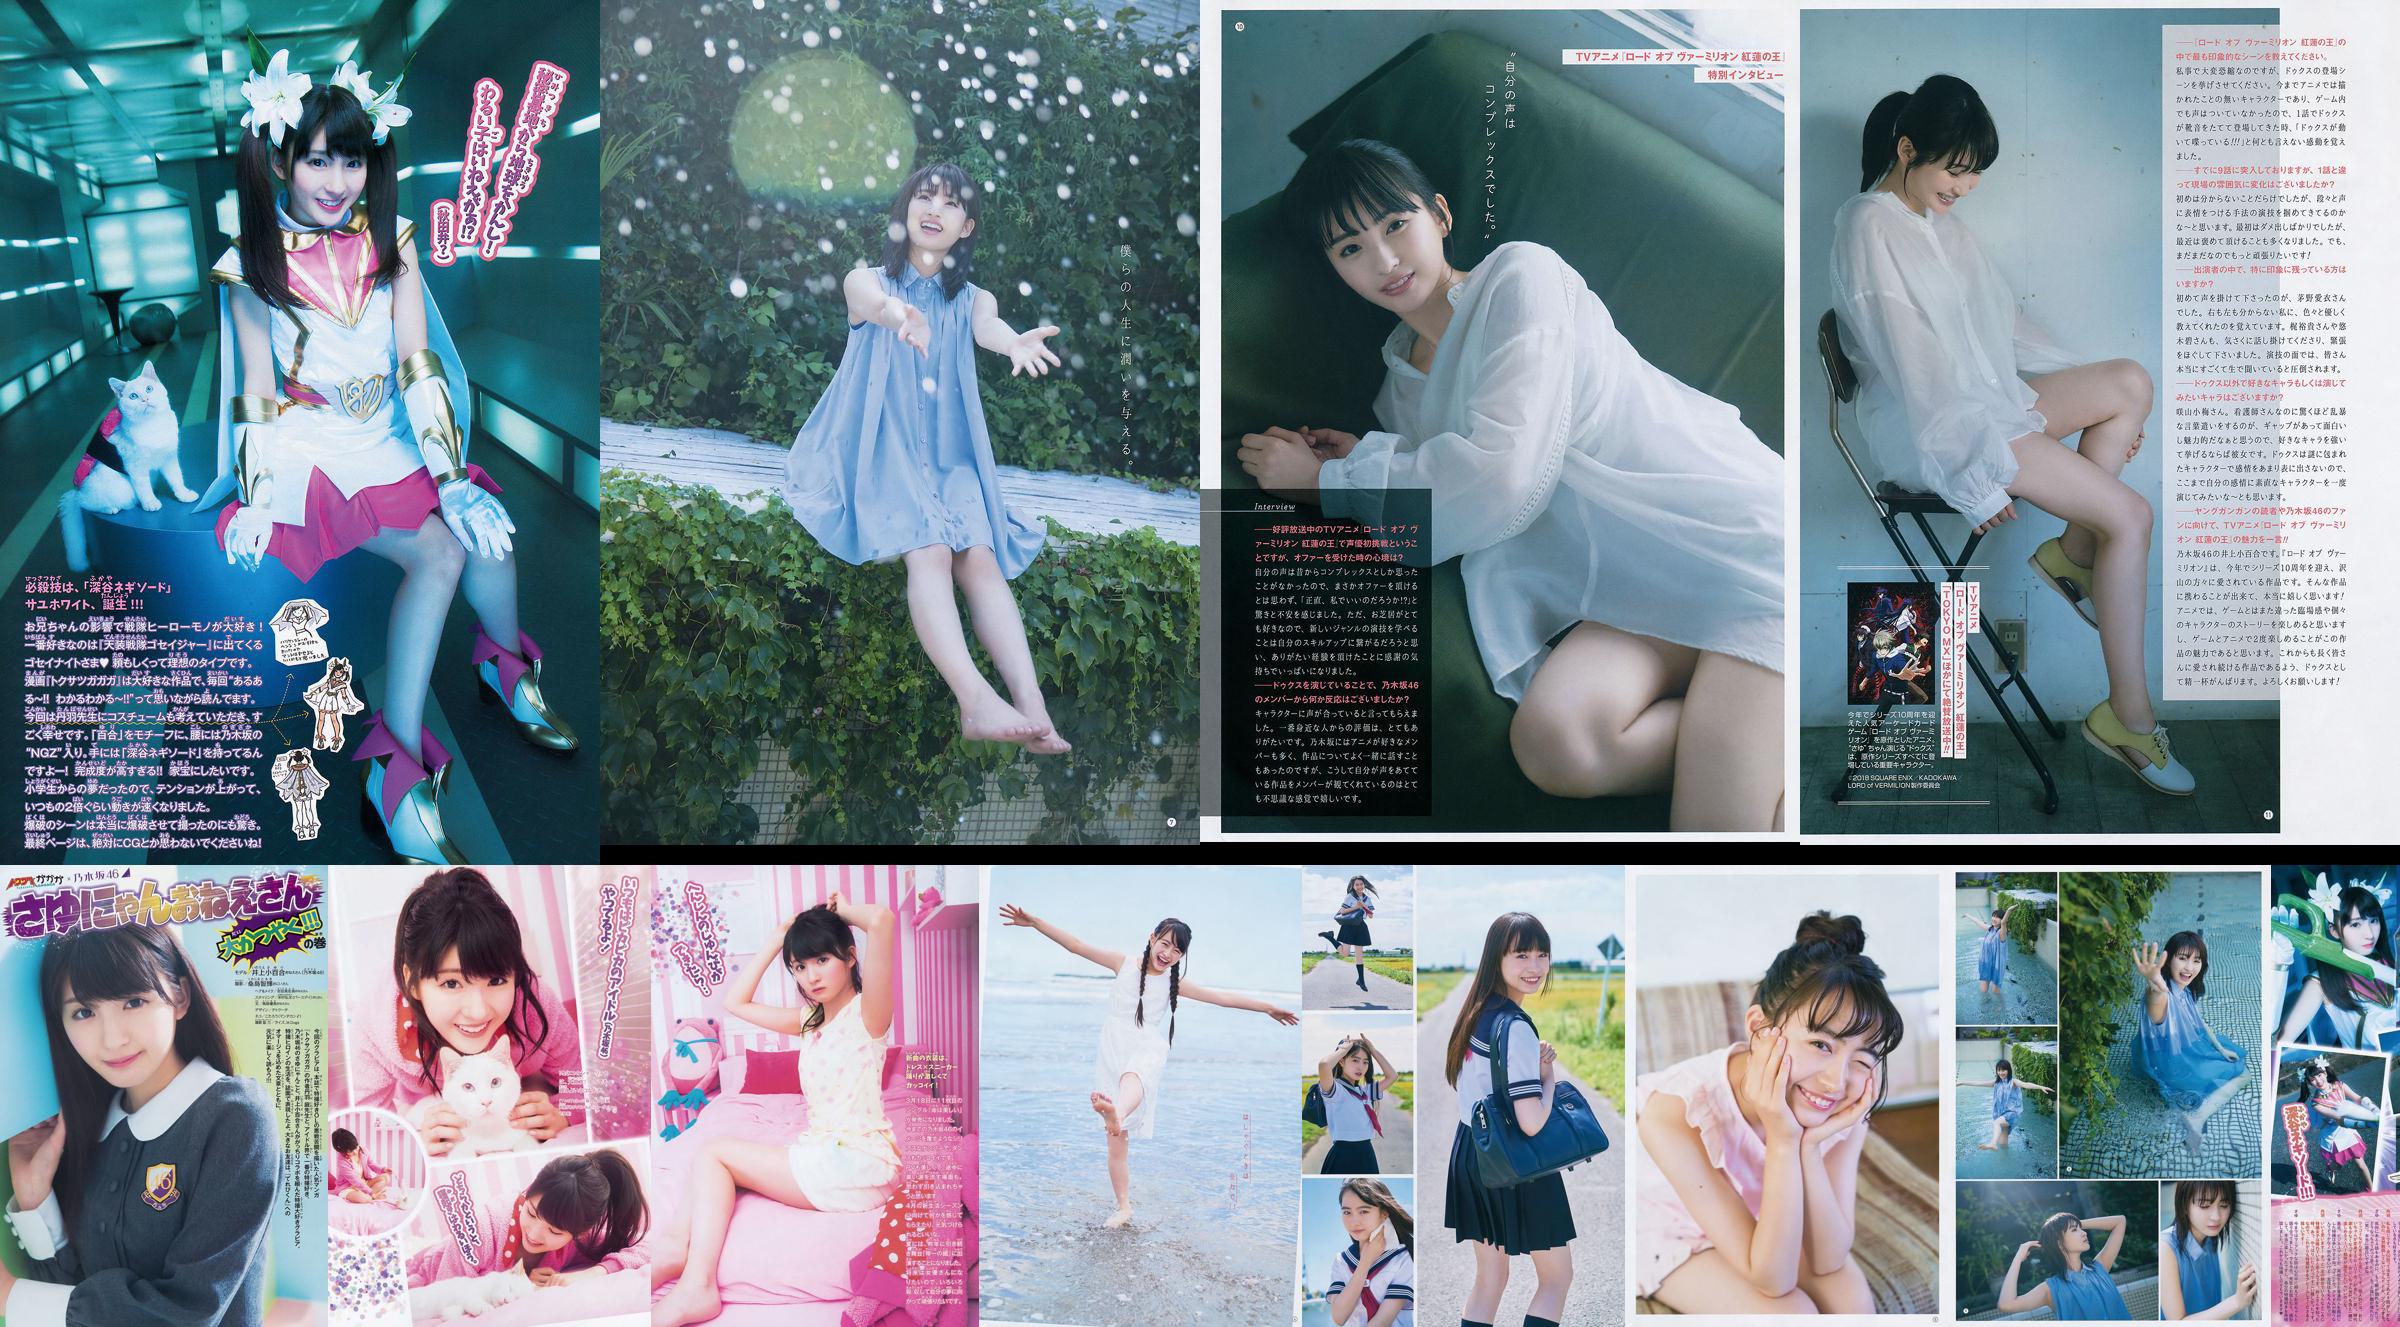 [Young Gangan] Sayuri Inoue Son sable d'origine 2018 Magazine photo n ° 18 No.8f8687 Page 9